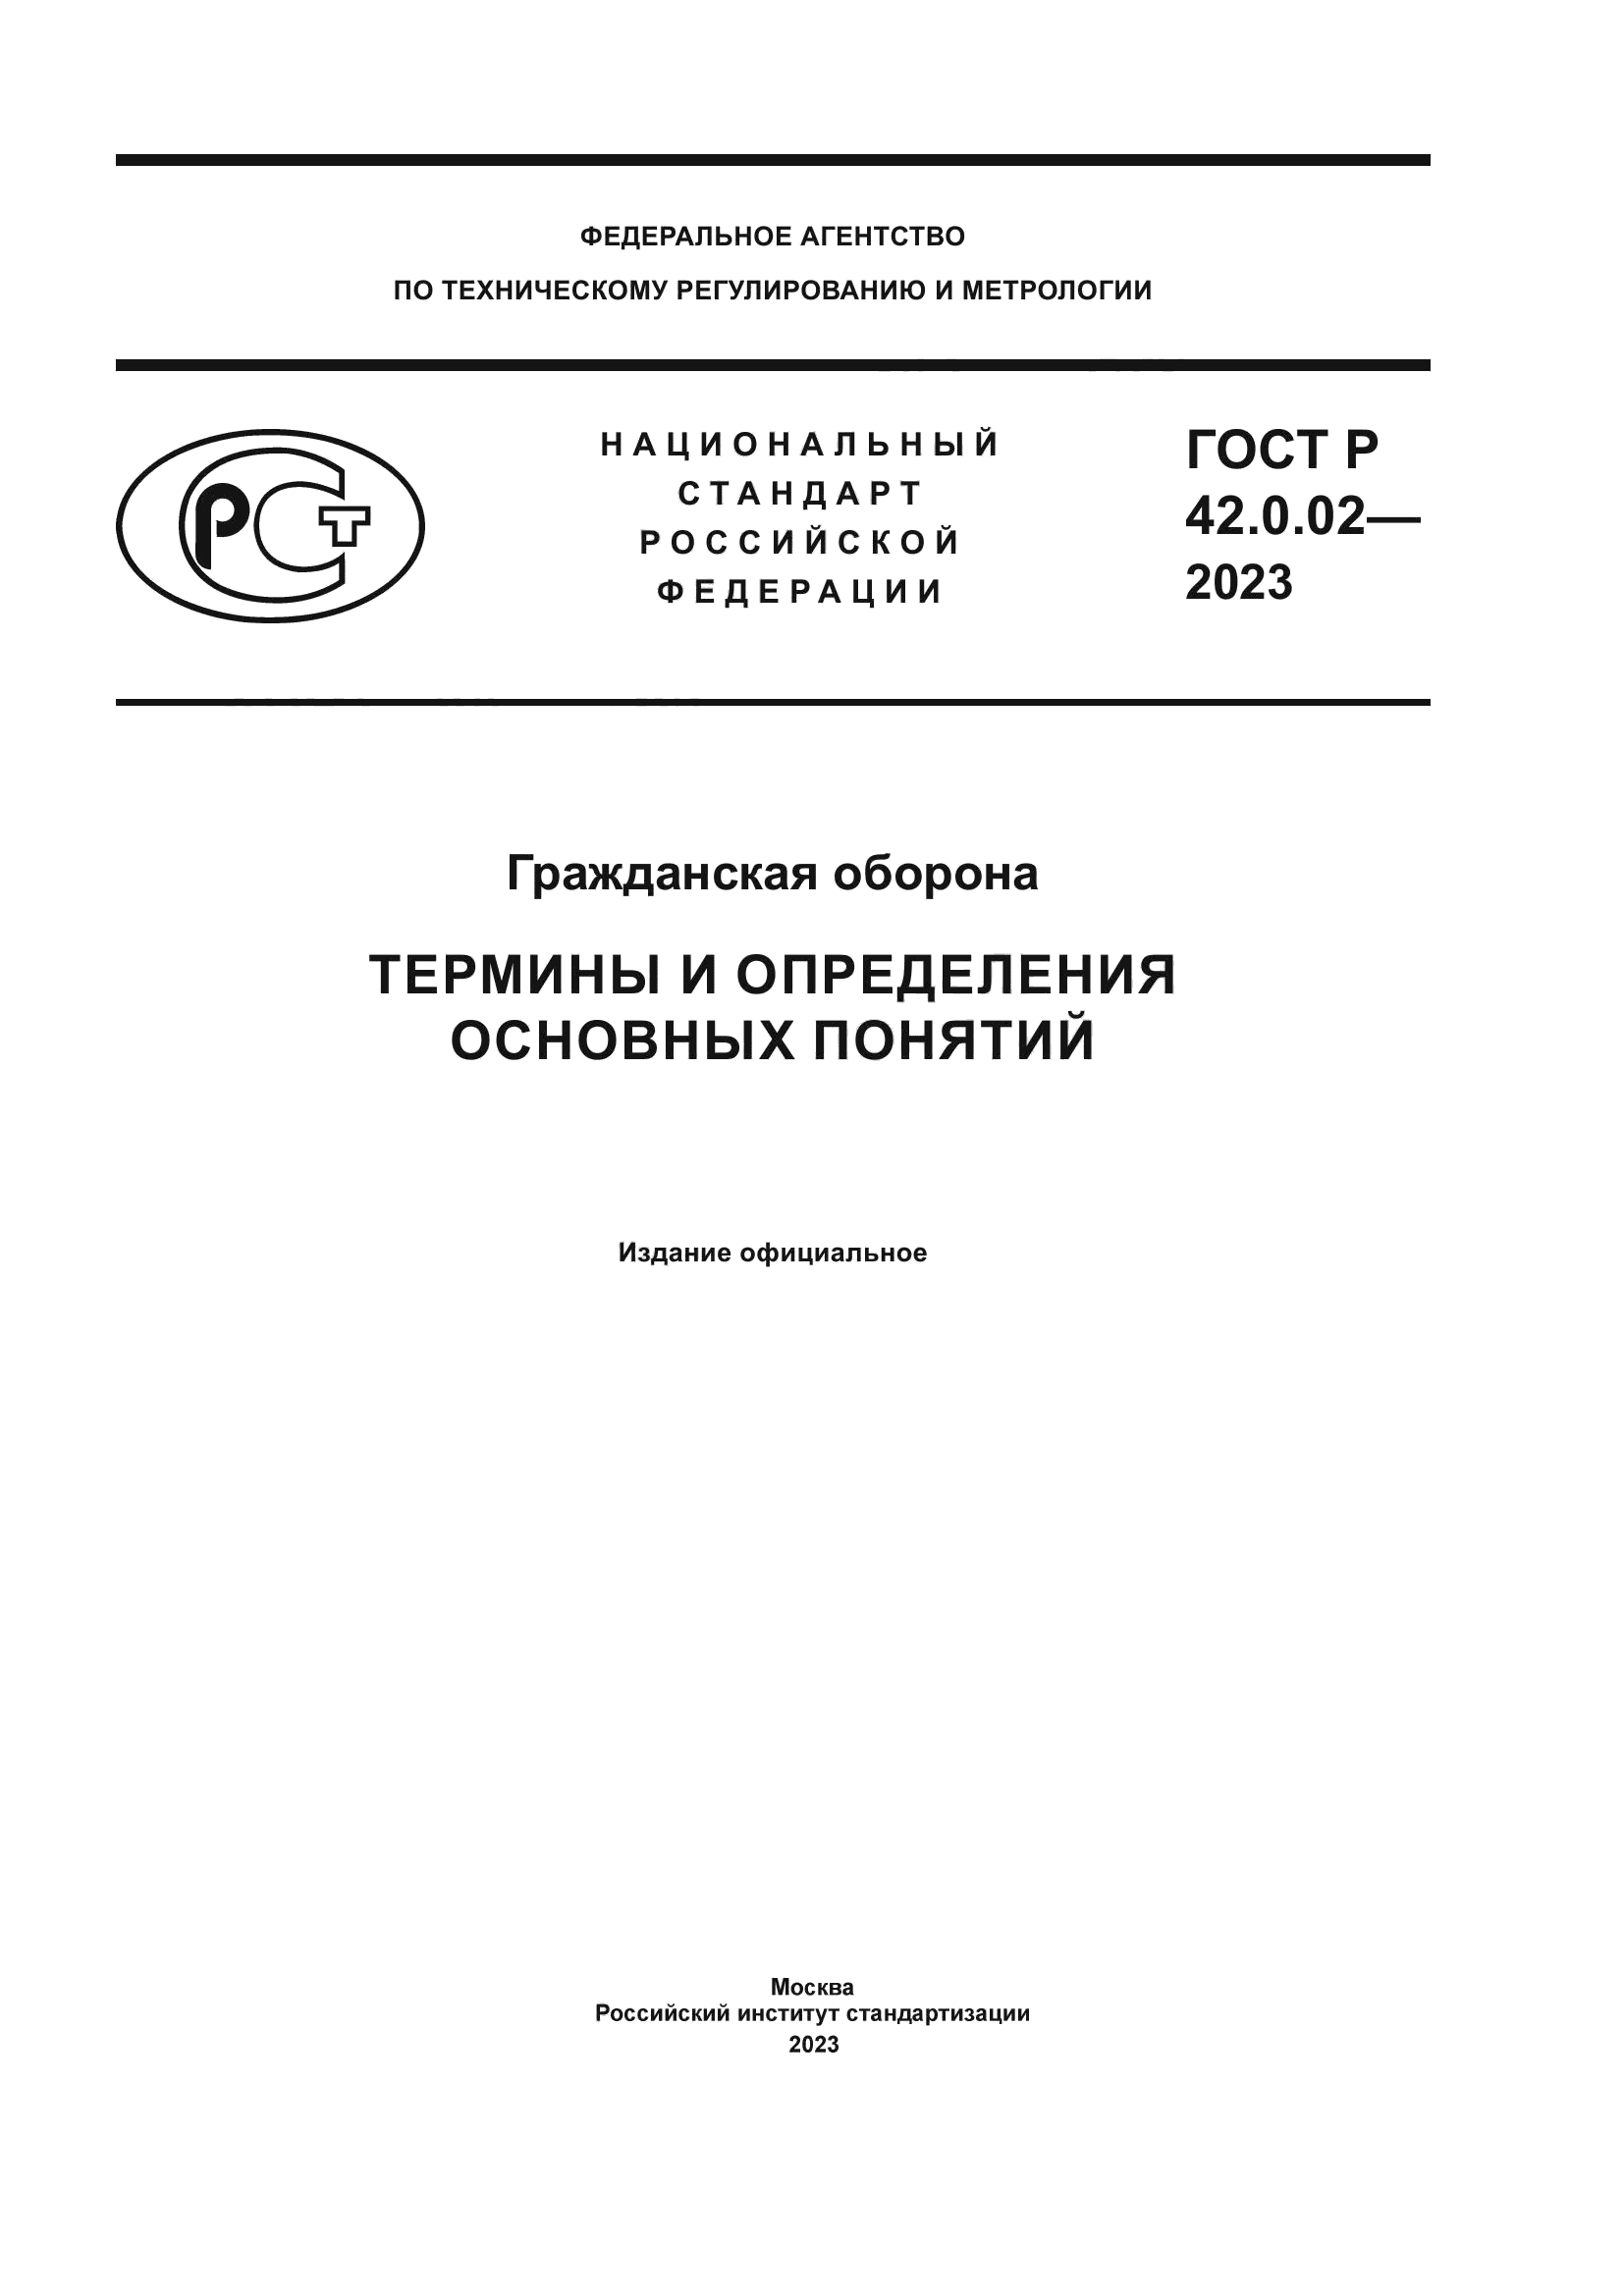 ГОСТ Р 42.0.02-2023